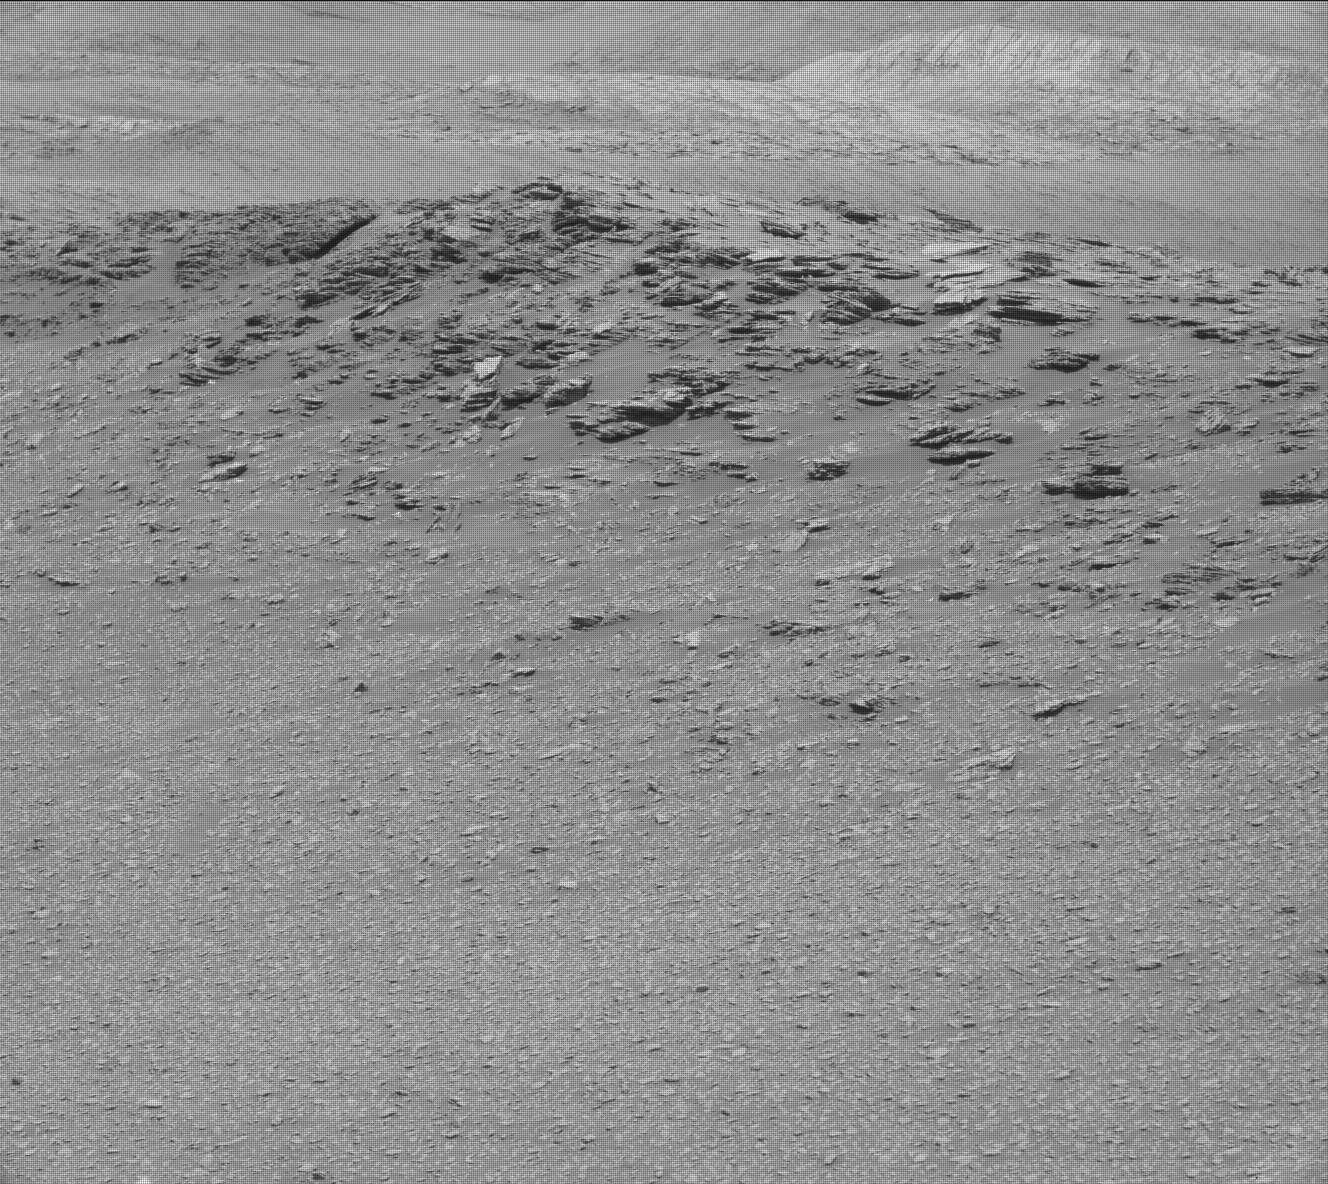 MARS: CURIOSITY u krateru  GALE Vol II. - Page 46 2473ML0131280020904166C00_DXXX